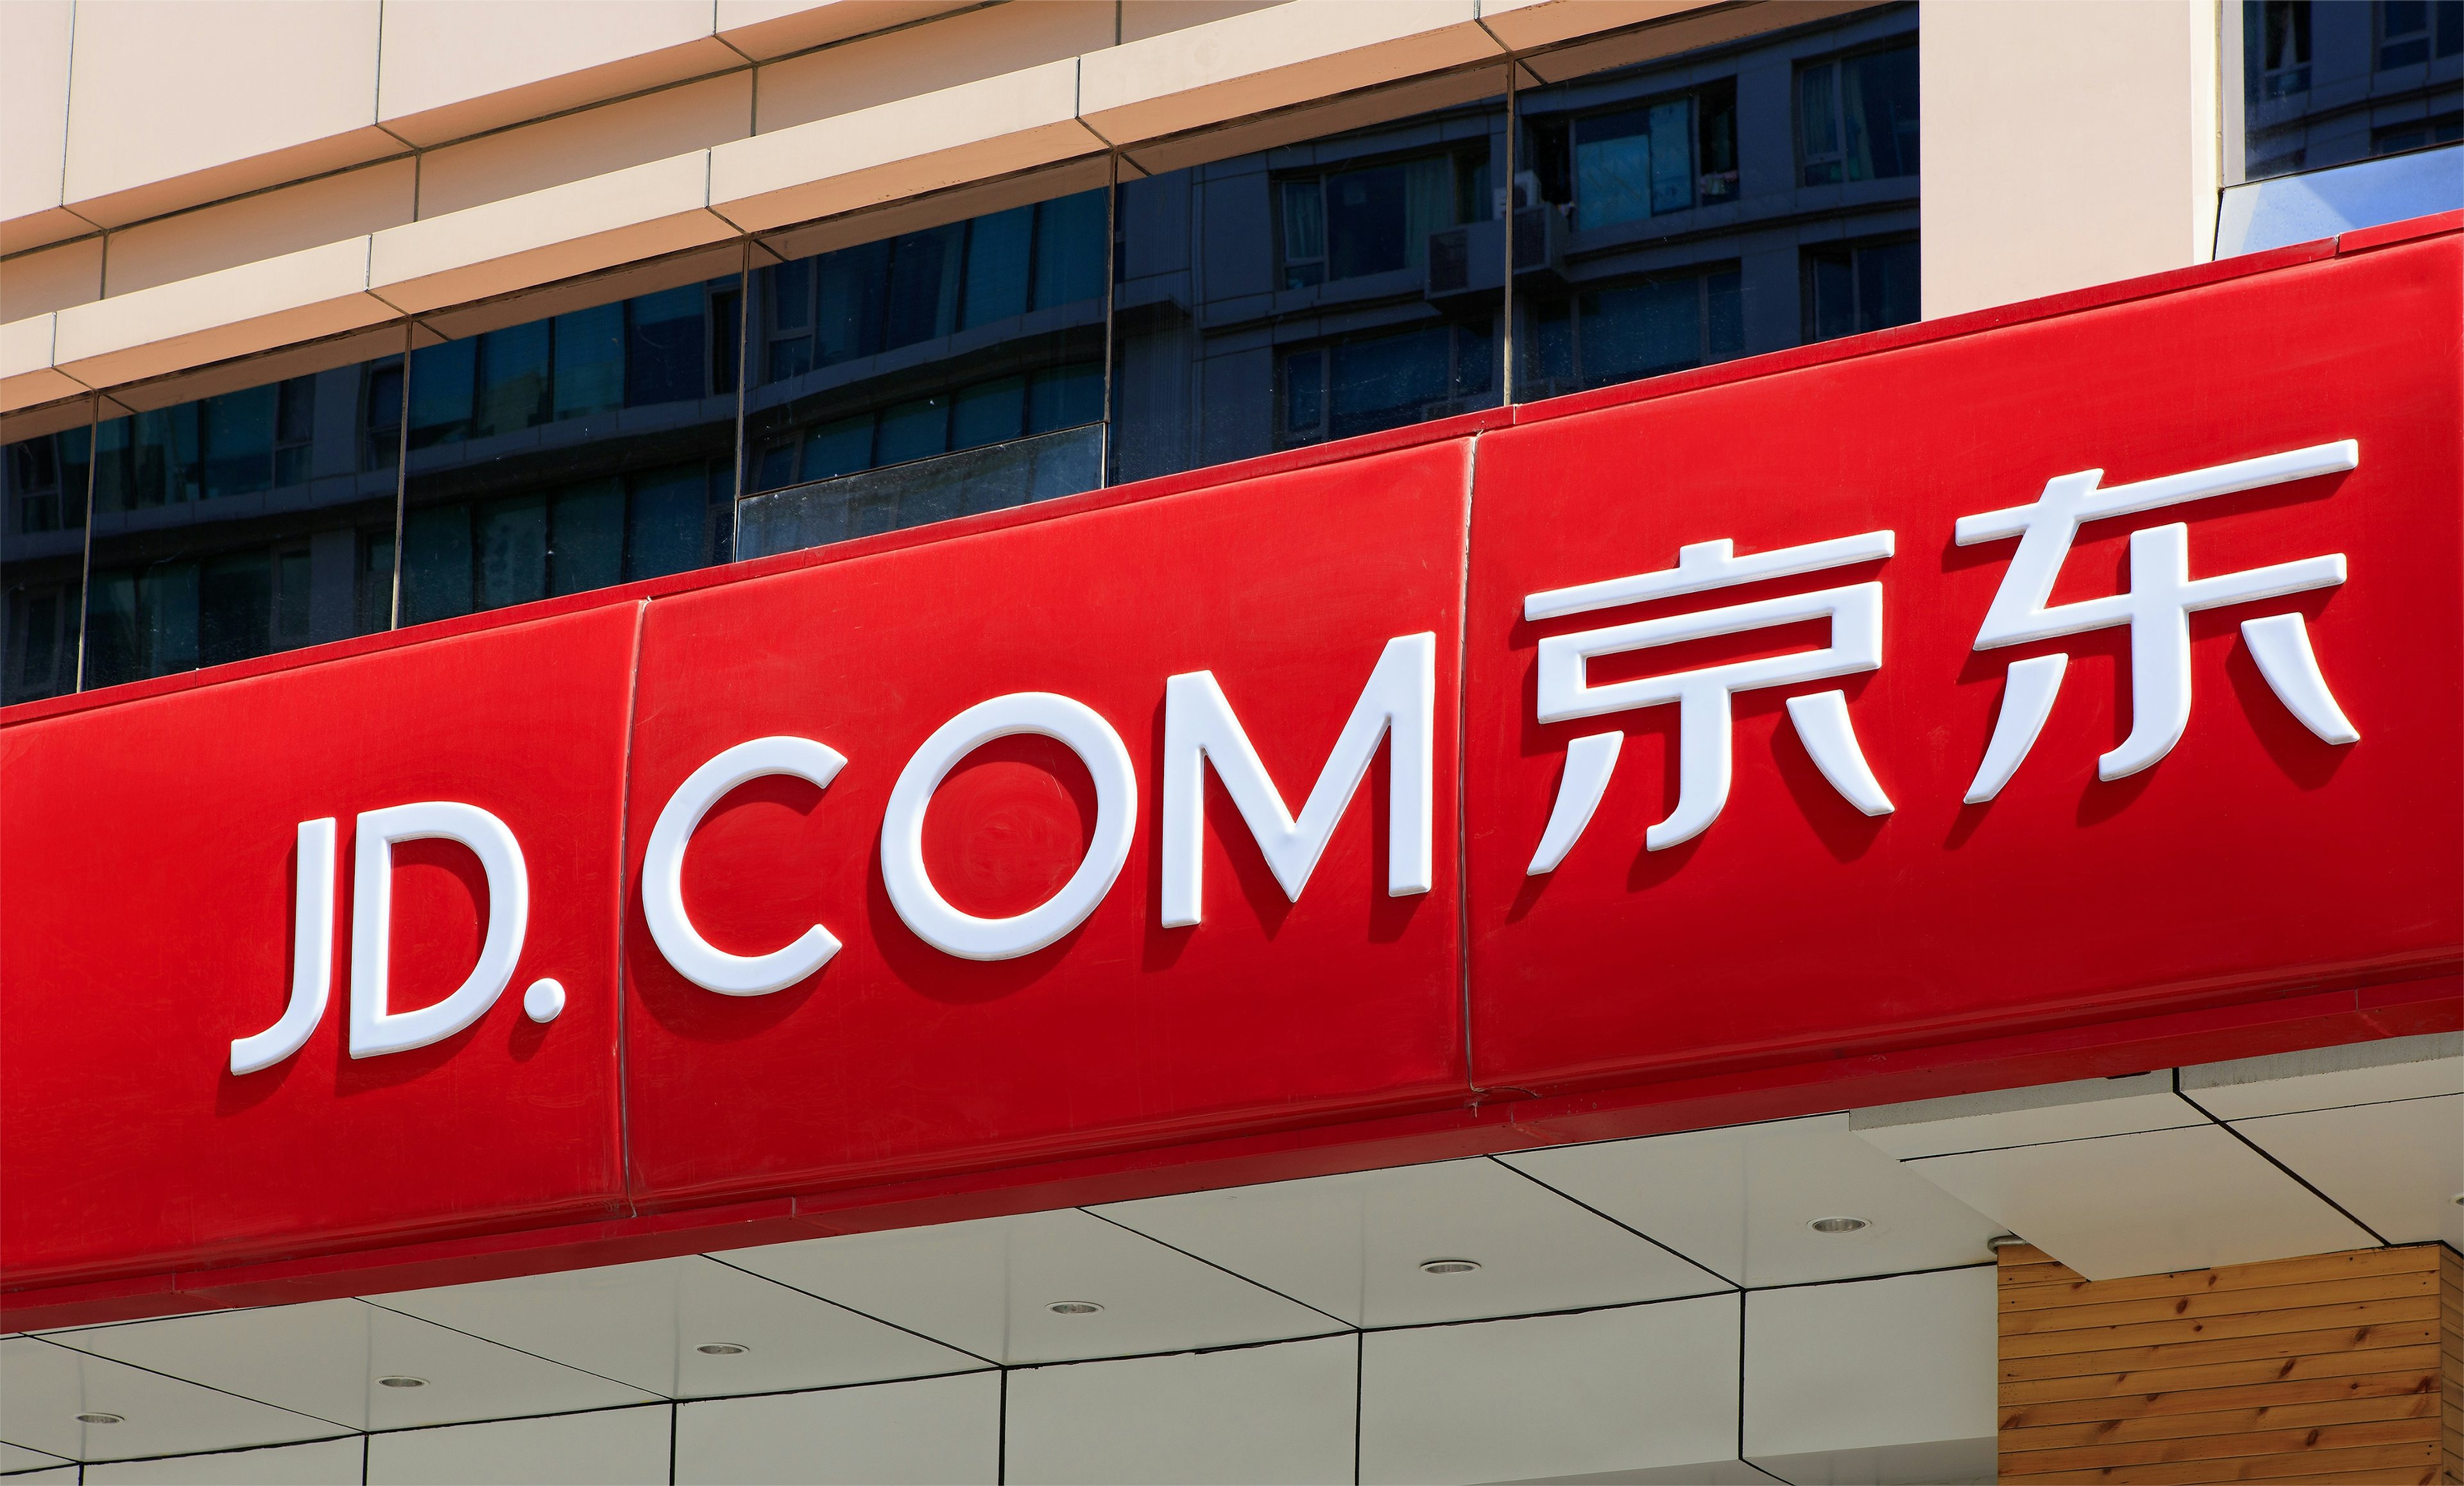 A logo for JD.com on display in Beijing. (<a href="http://shutterstock.com">Shutterstock</a>)